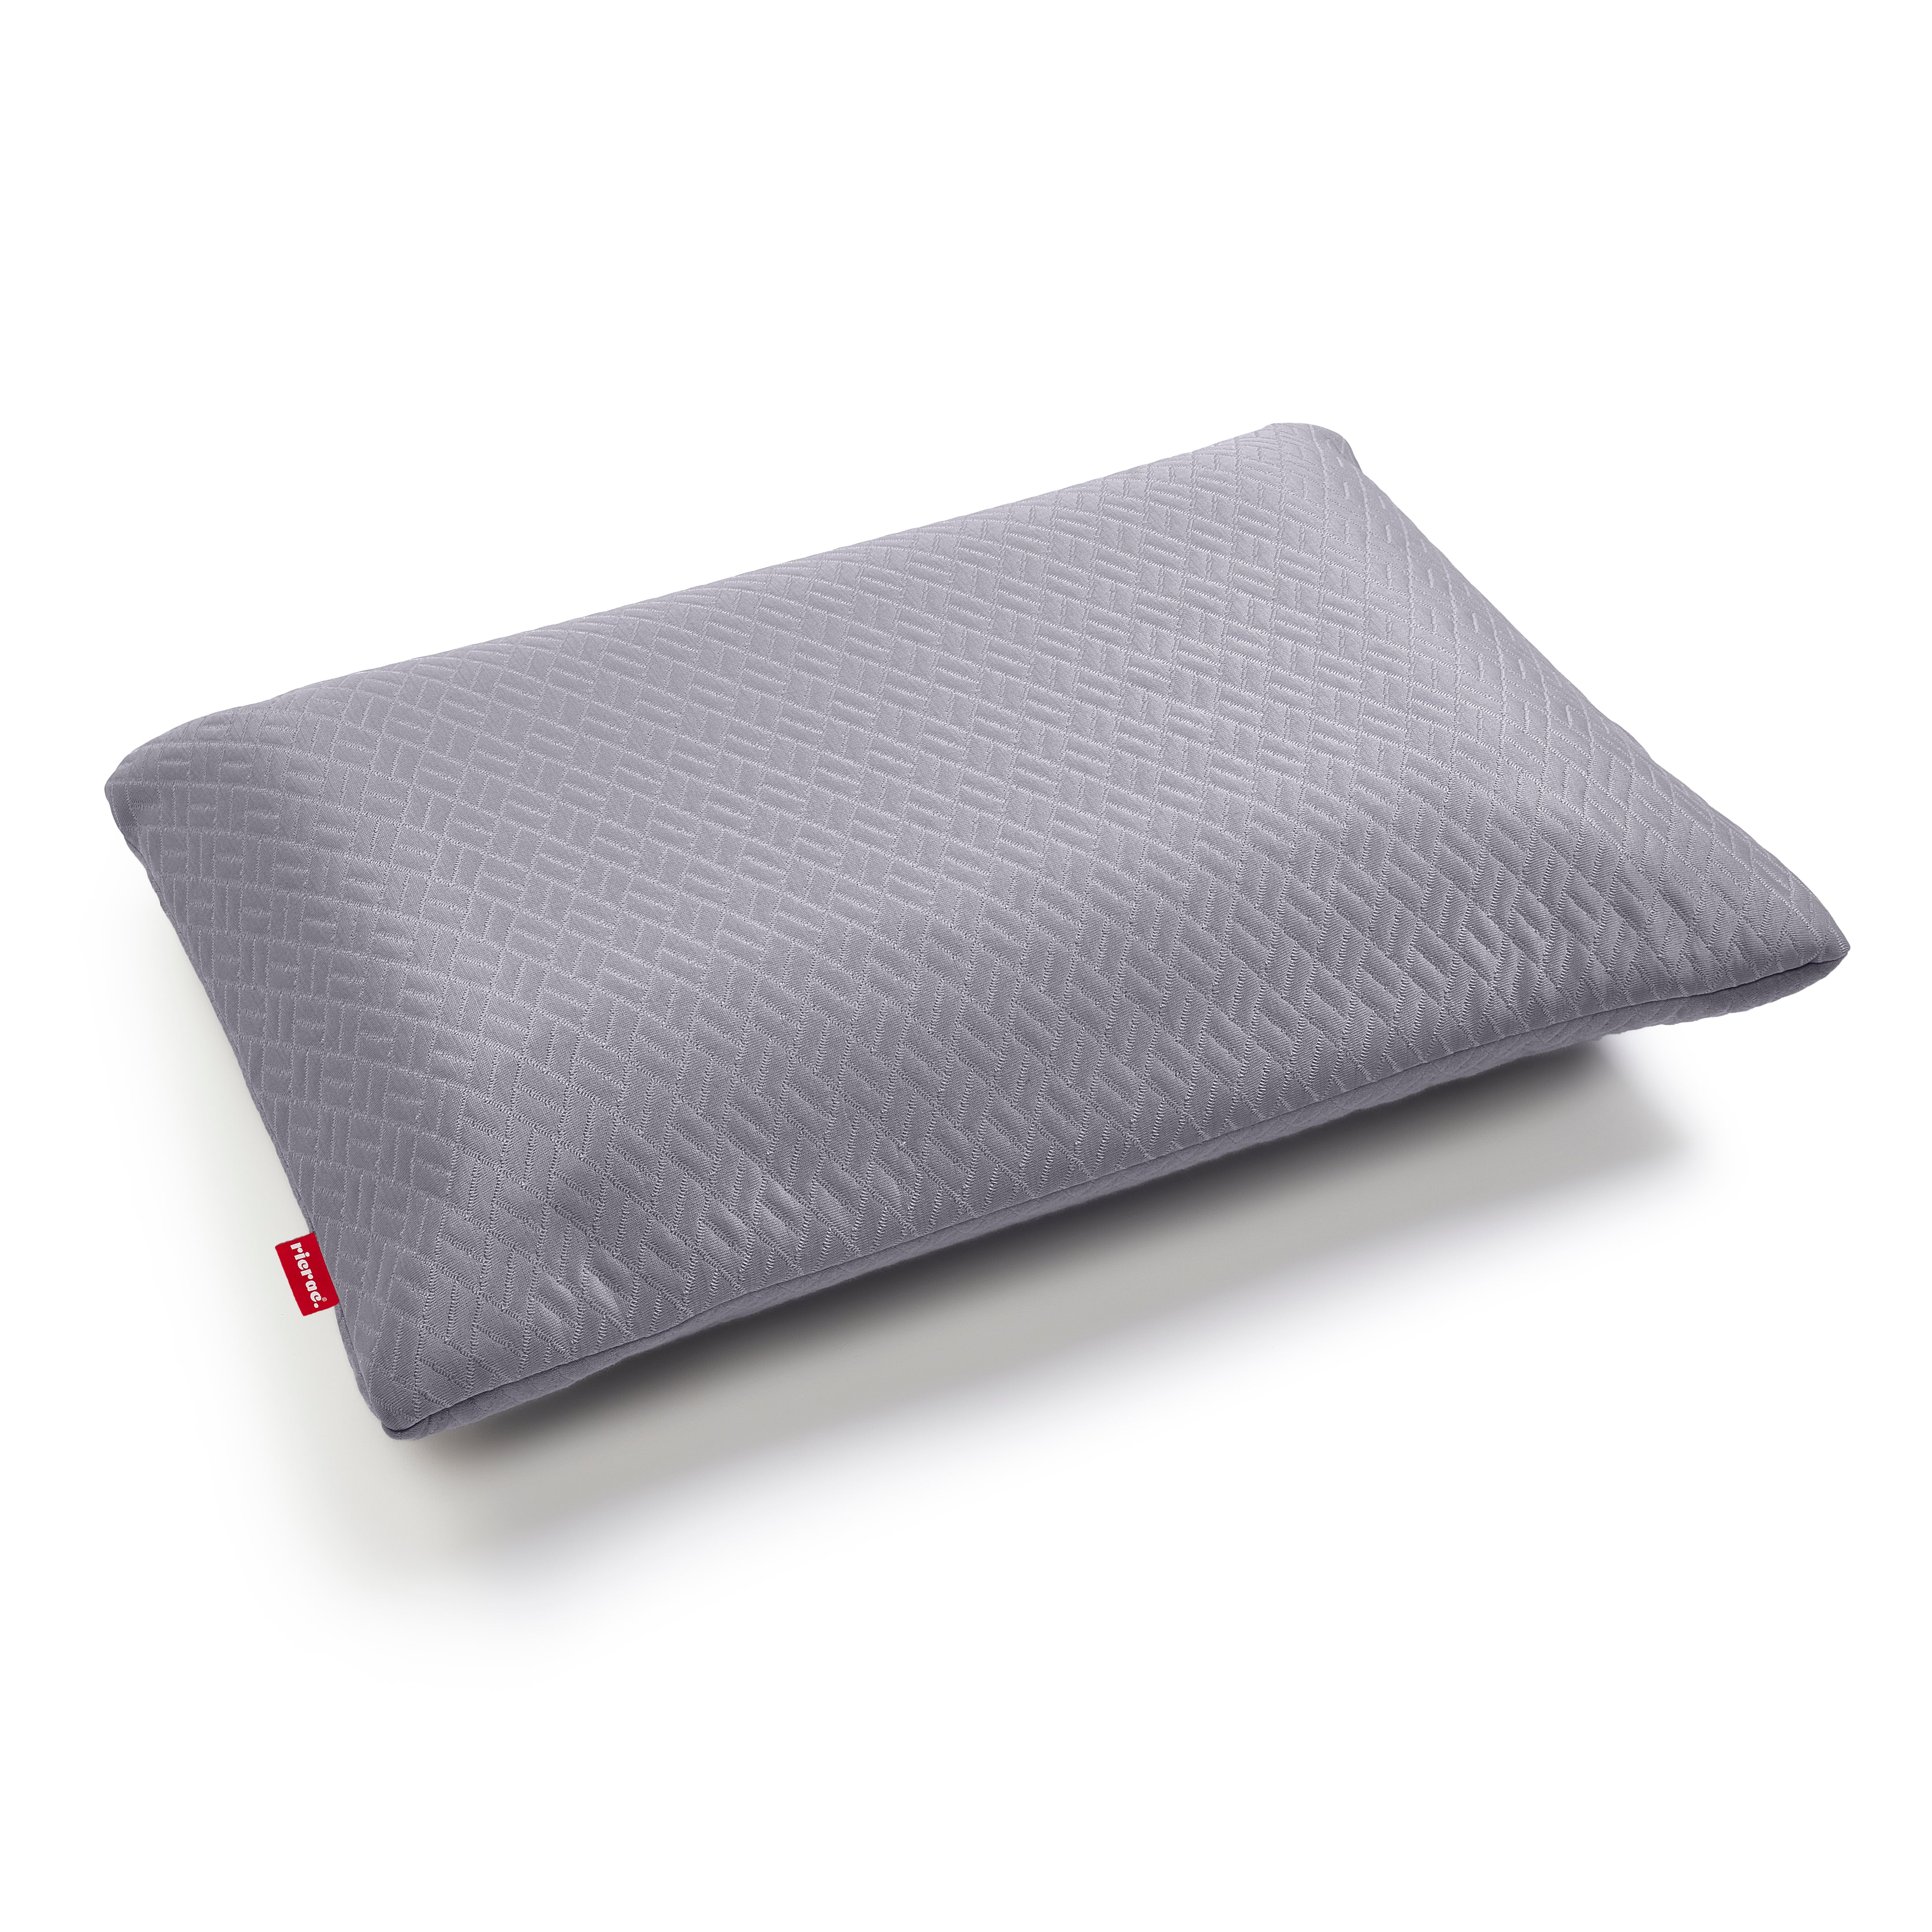 Hard Flat Foam Pillow